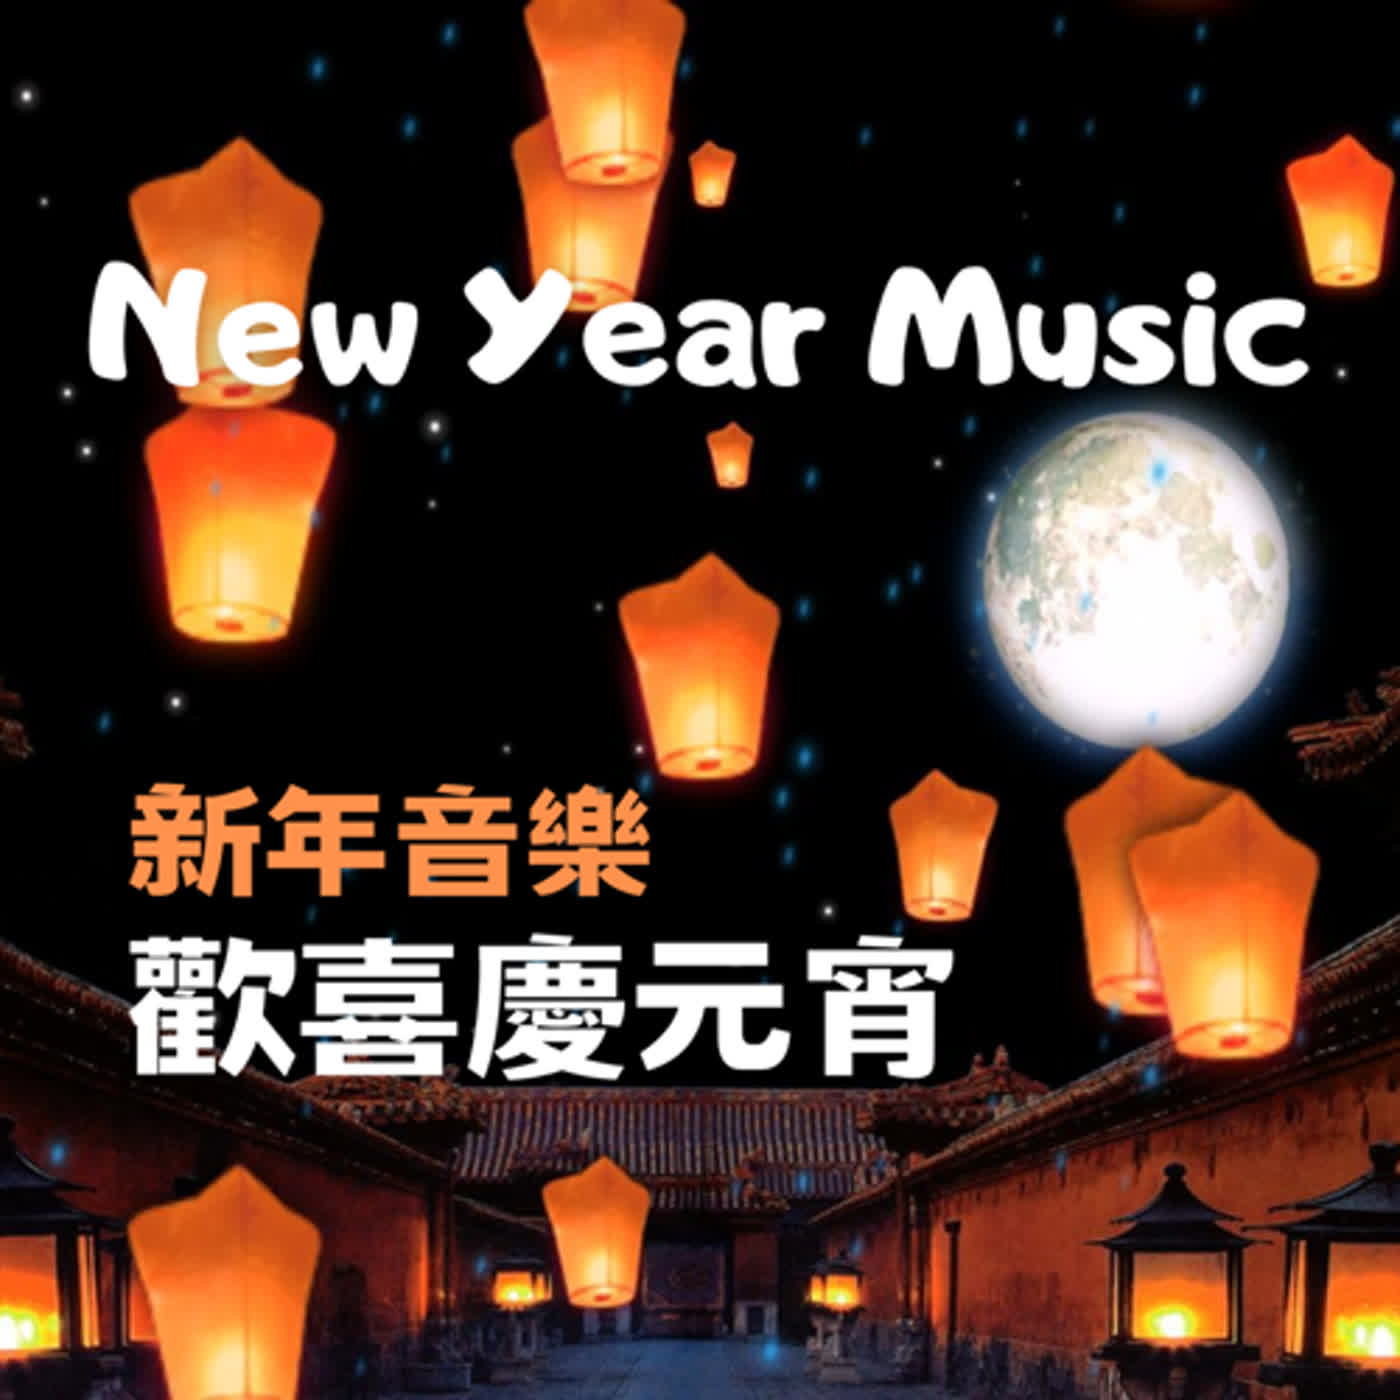 🧧歡喜慶元宵～新年音樂 🧧Chinese New Year Music🎵